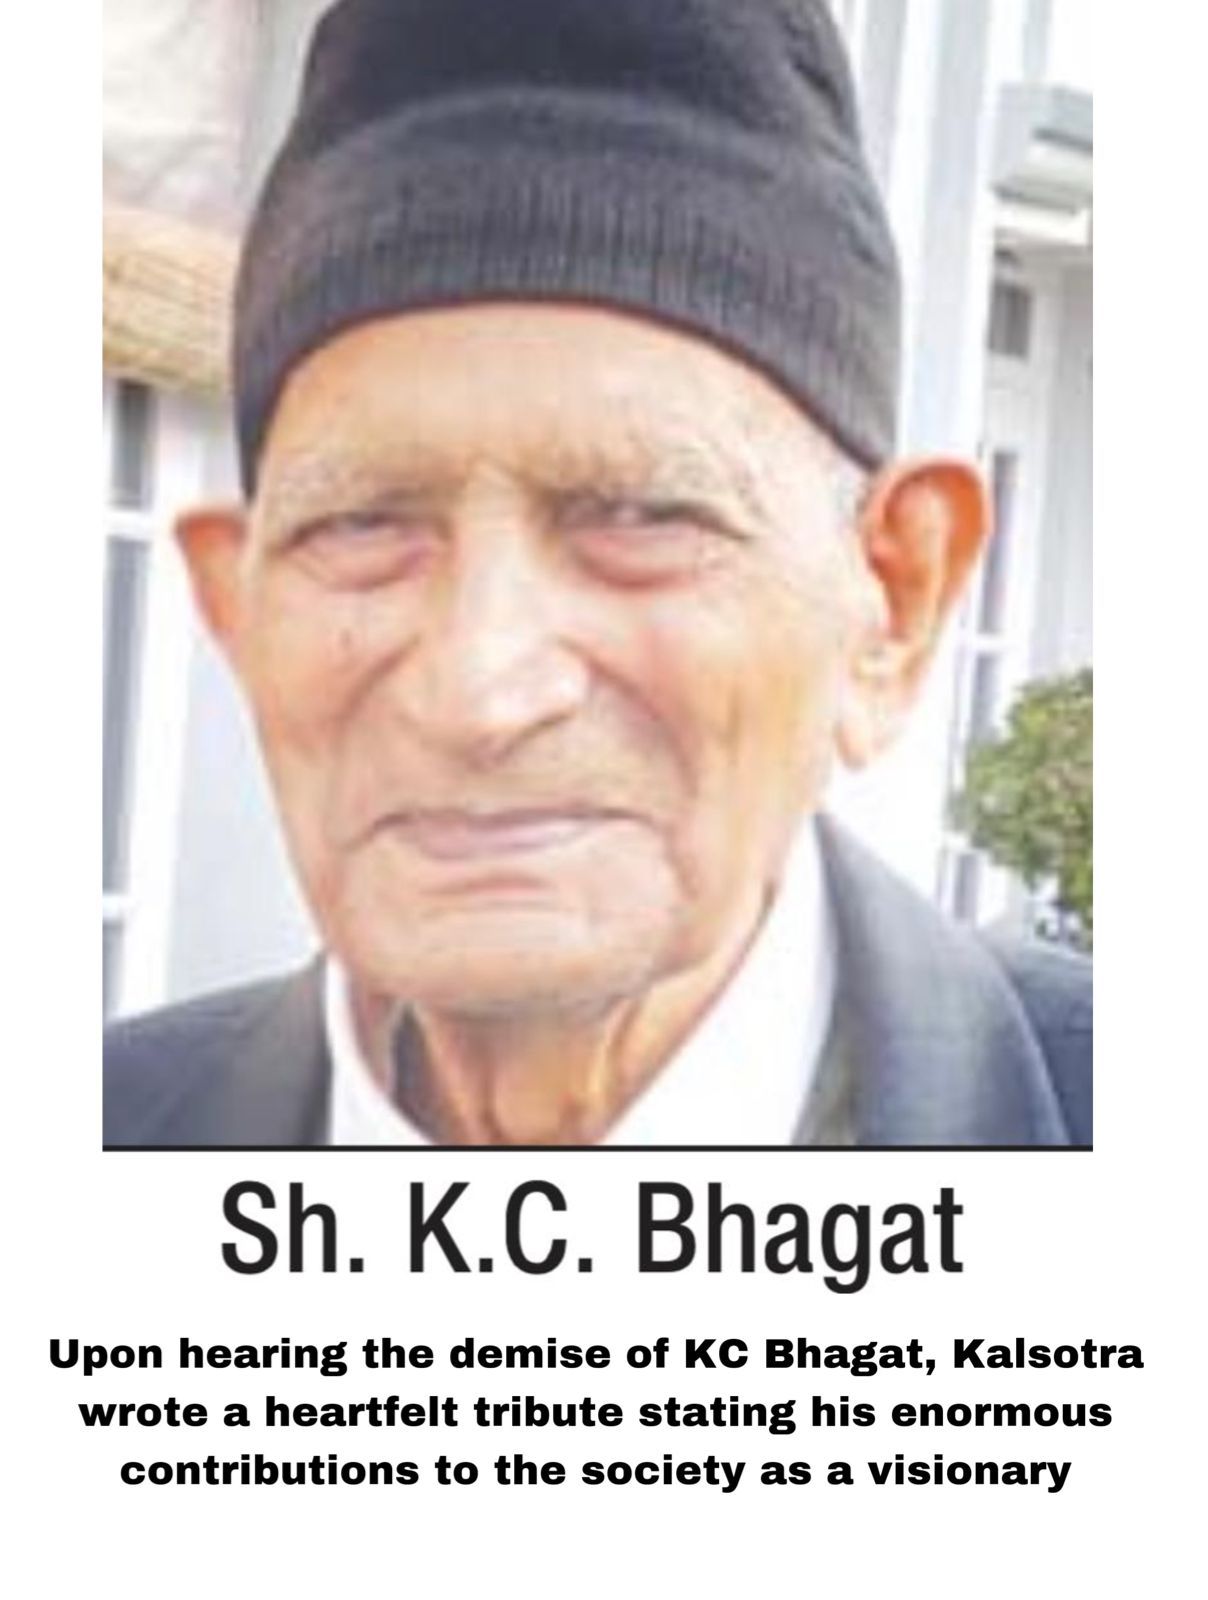 'Well known bureaucrat, writer, social reformer, KC Bhagat passes away at 97 '